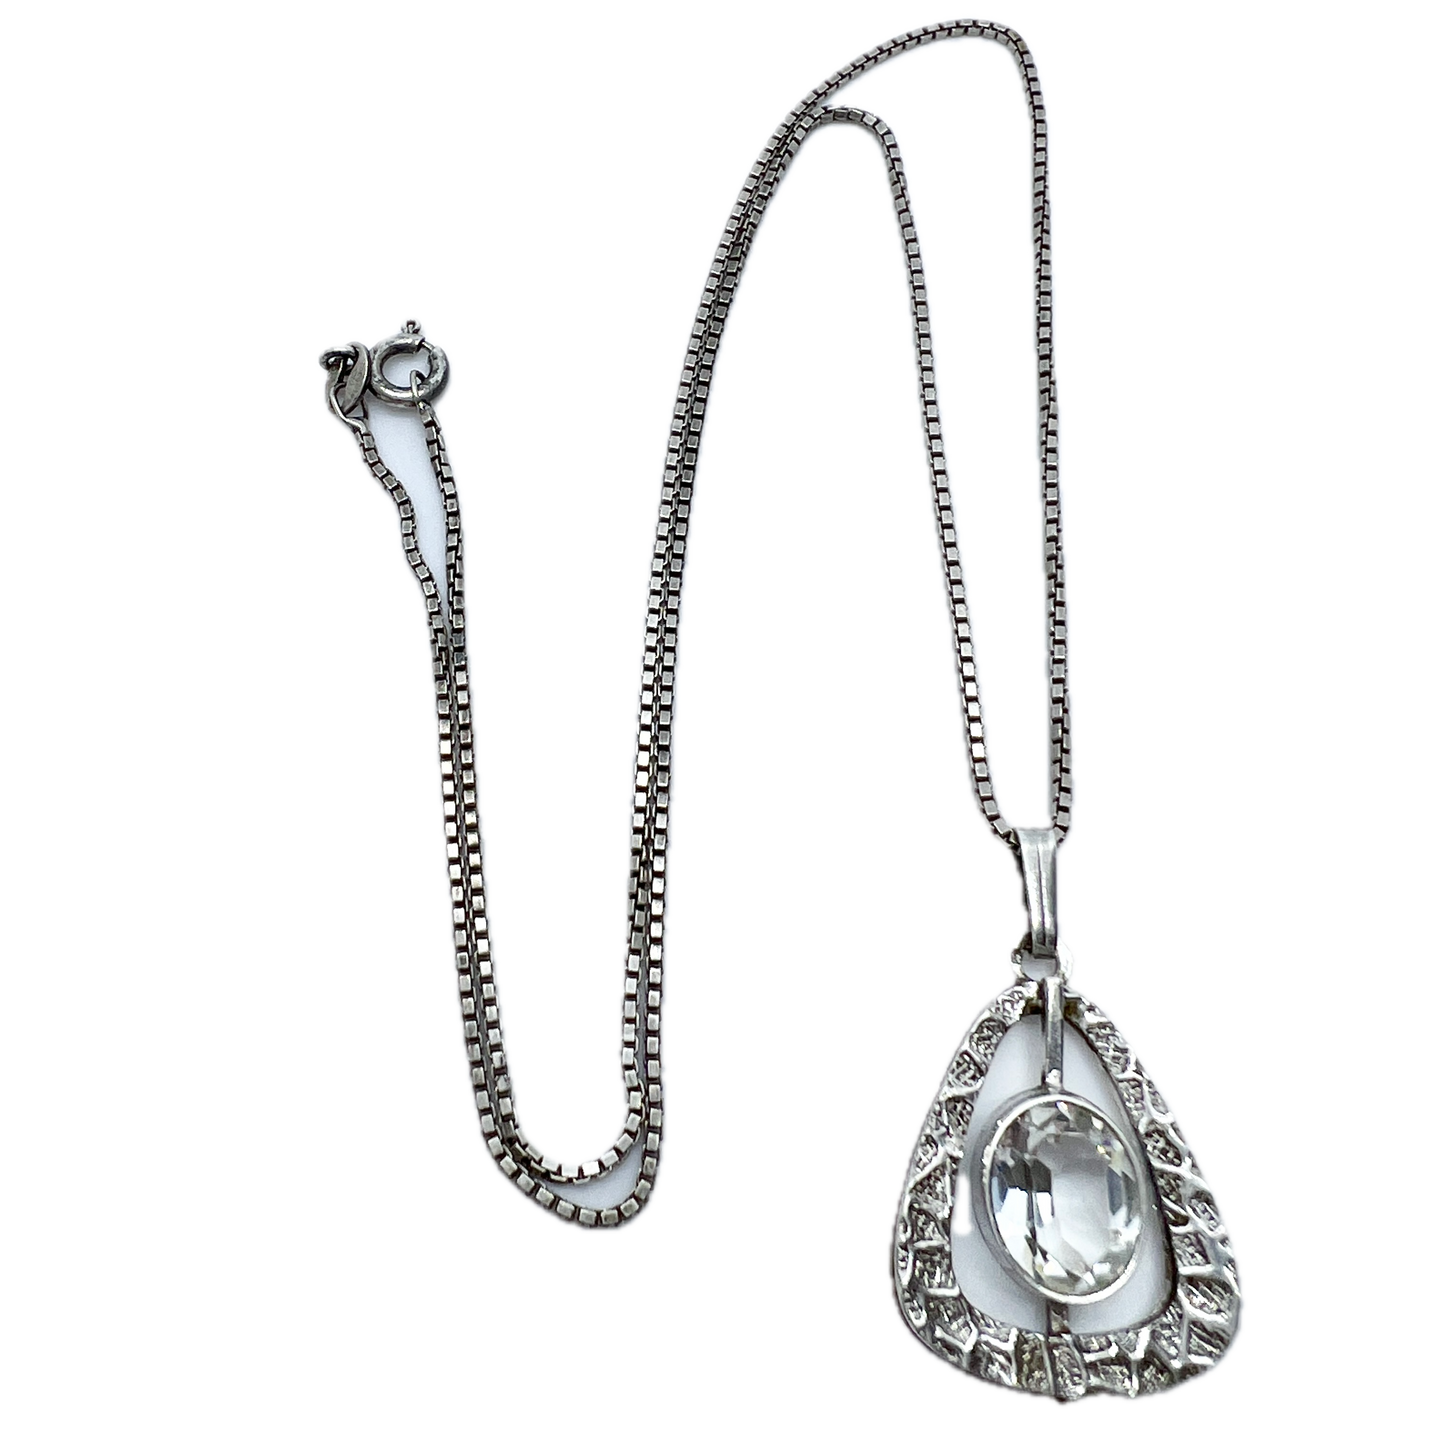 Kollmar & Jourdan, Germany c 1960s. Solid Silver Quartz Pendant Necklace.